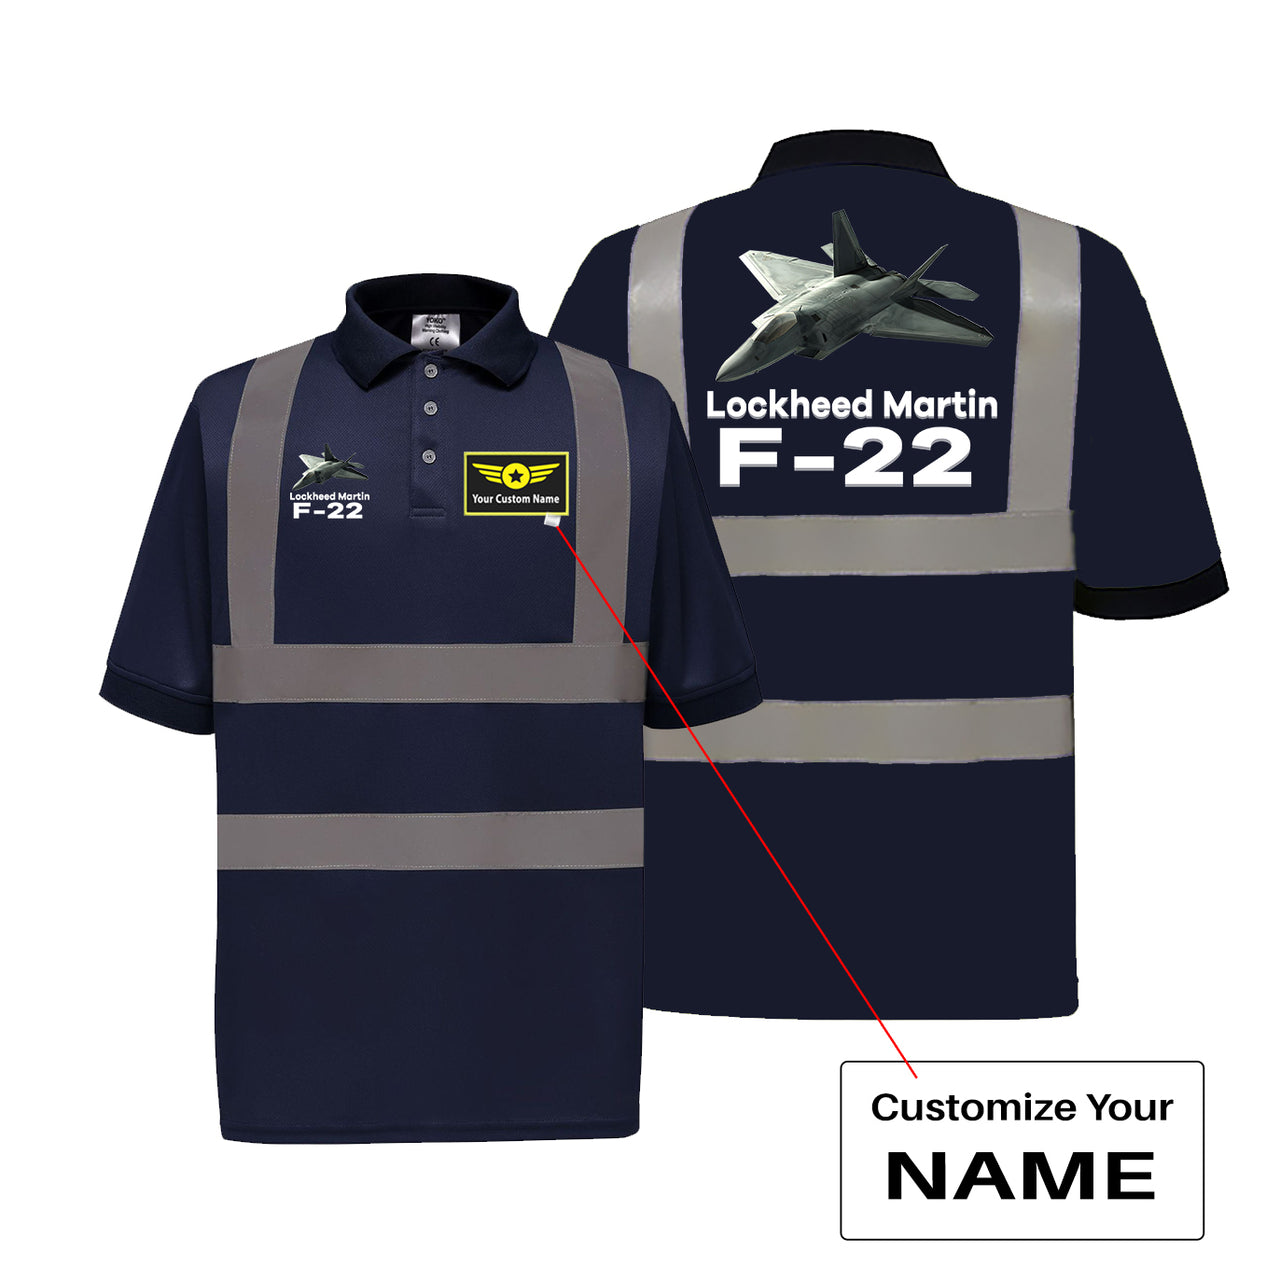 The Lockheed Martin F22 Designed Reflective Polo T-Shirts